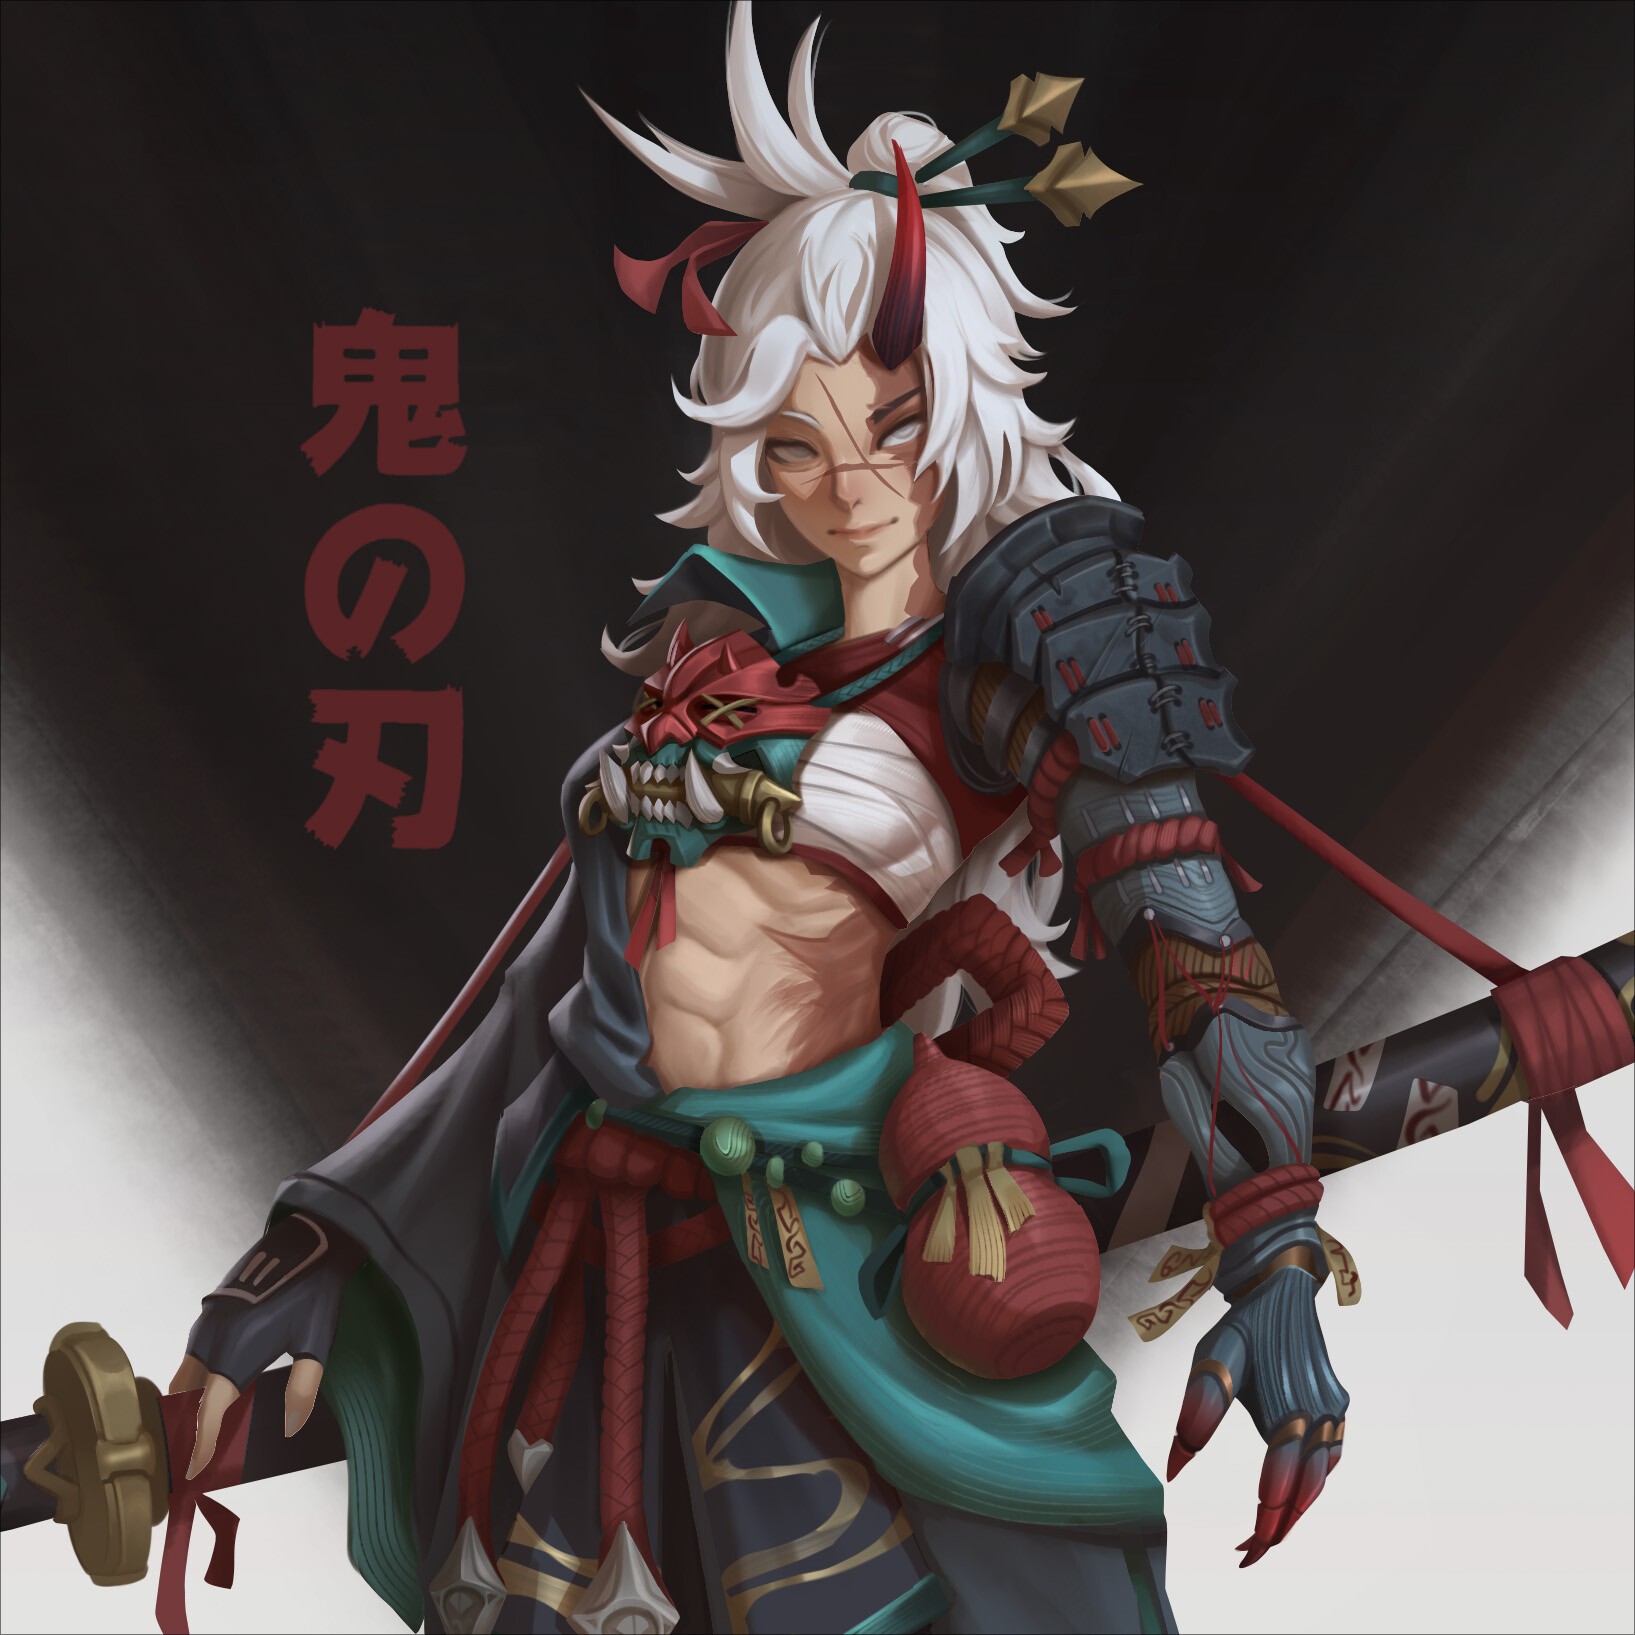 ArtStation - Oni Slayer character design